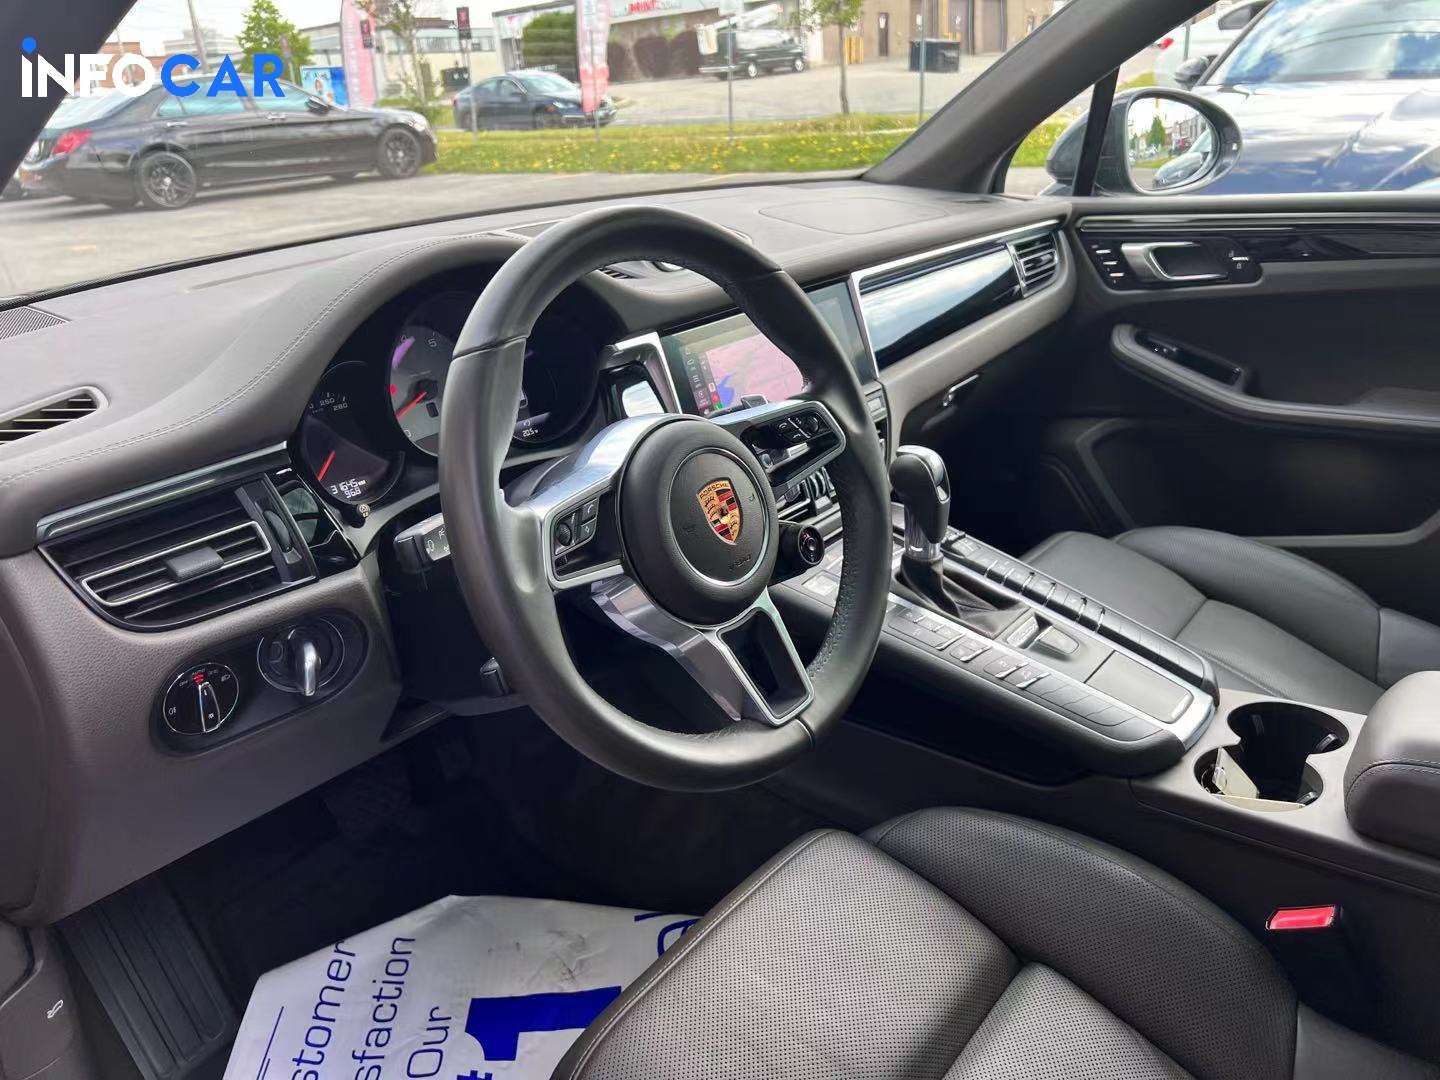 2019 Porsche Macan s - INFOCAR - Toronto Auto Trading Platform